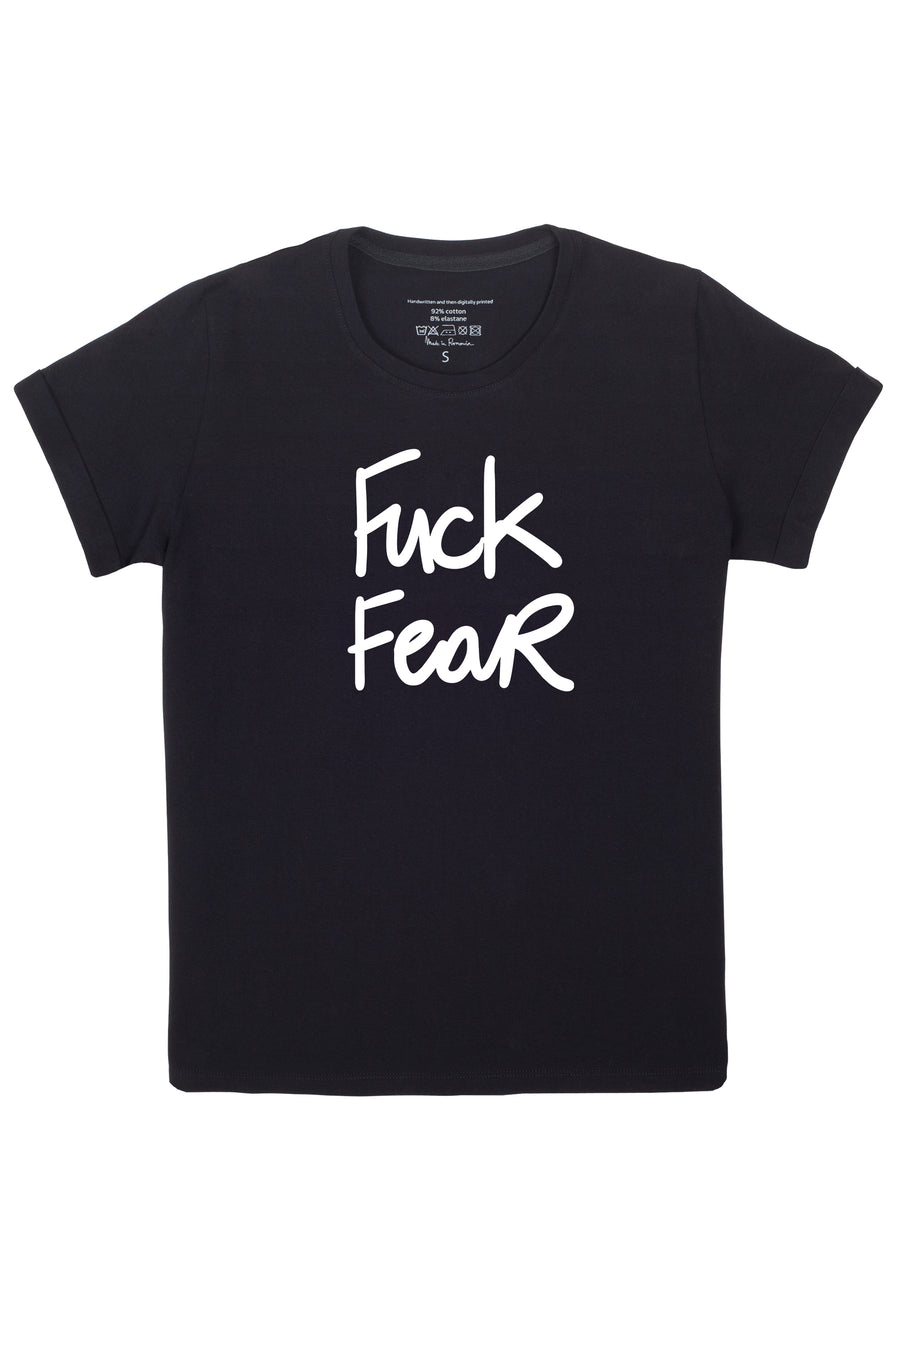 FUCK FEAR Tshirt Black version